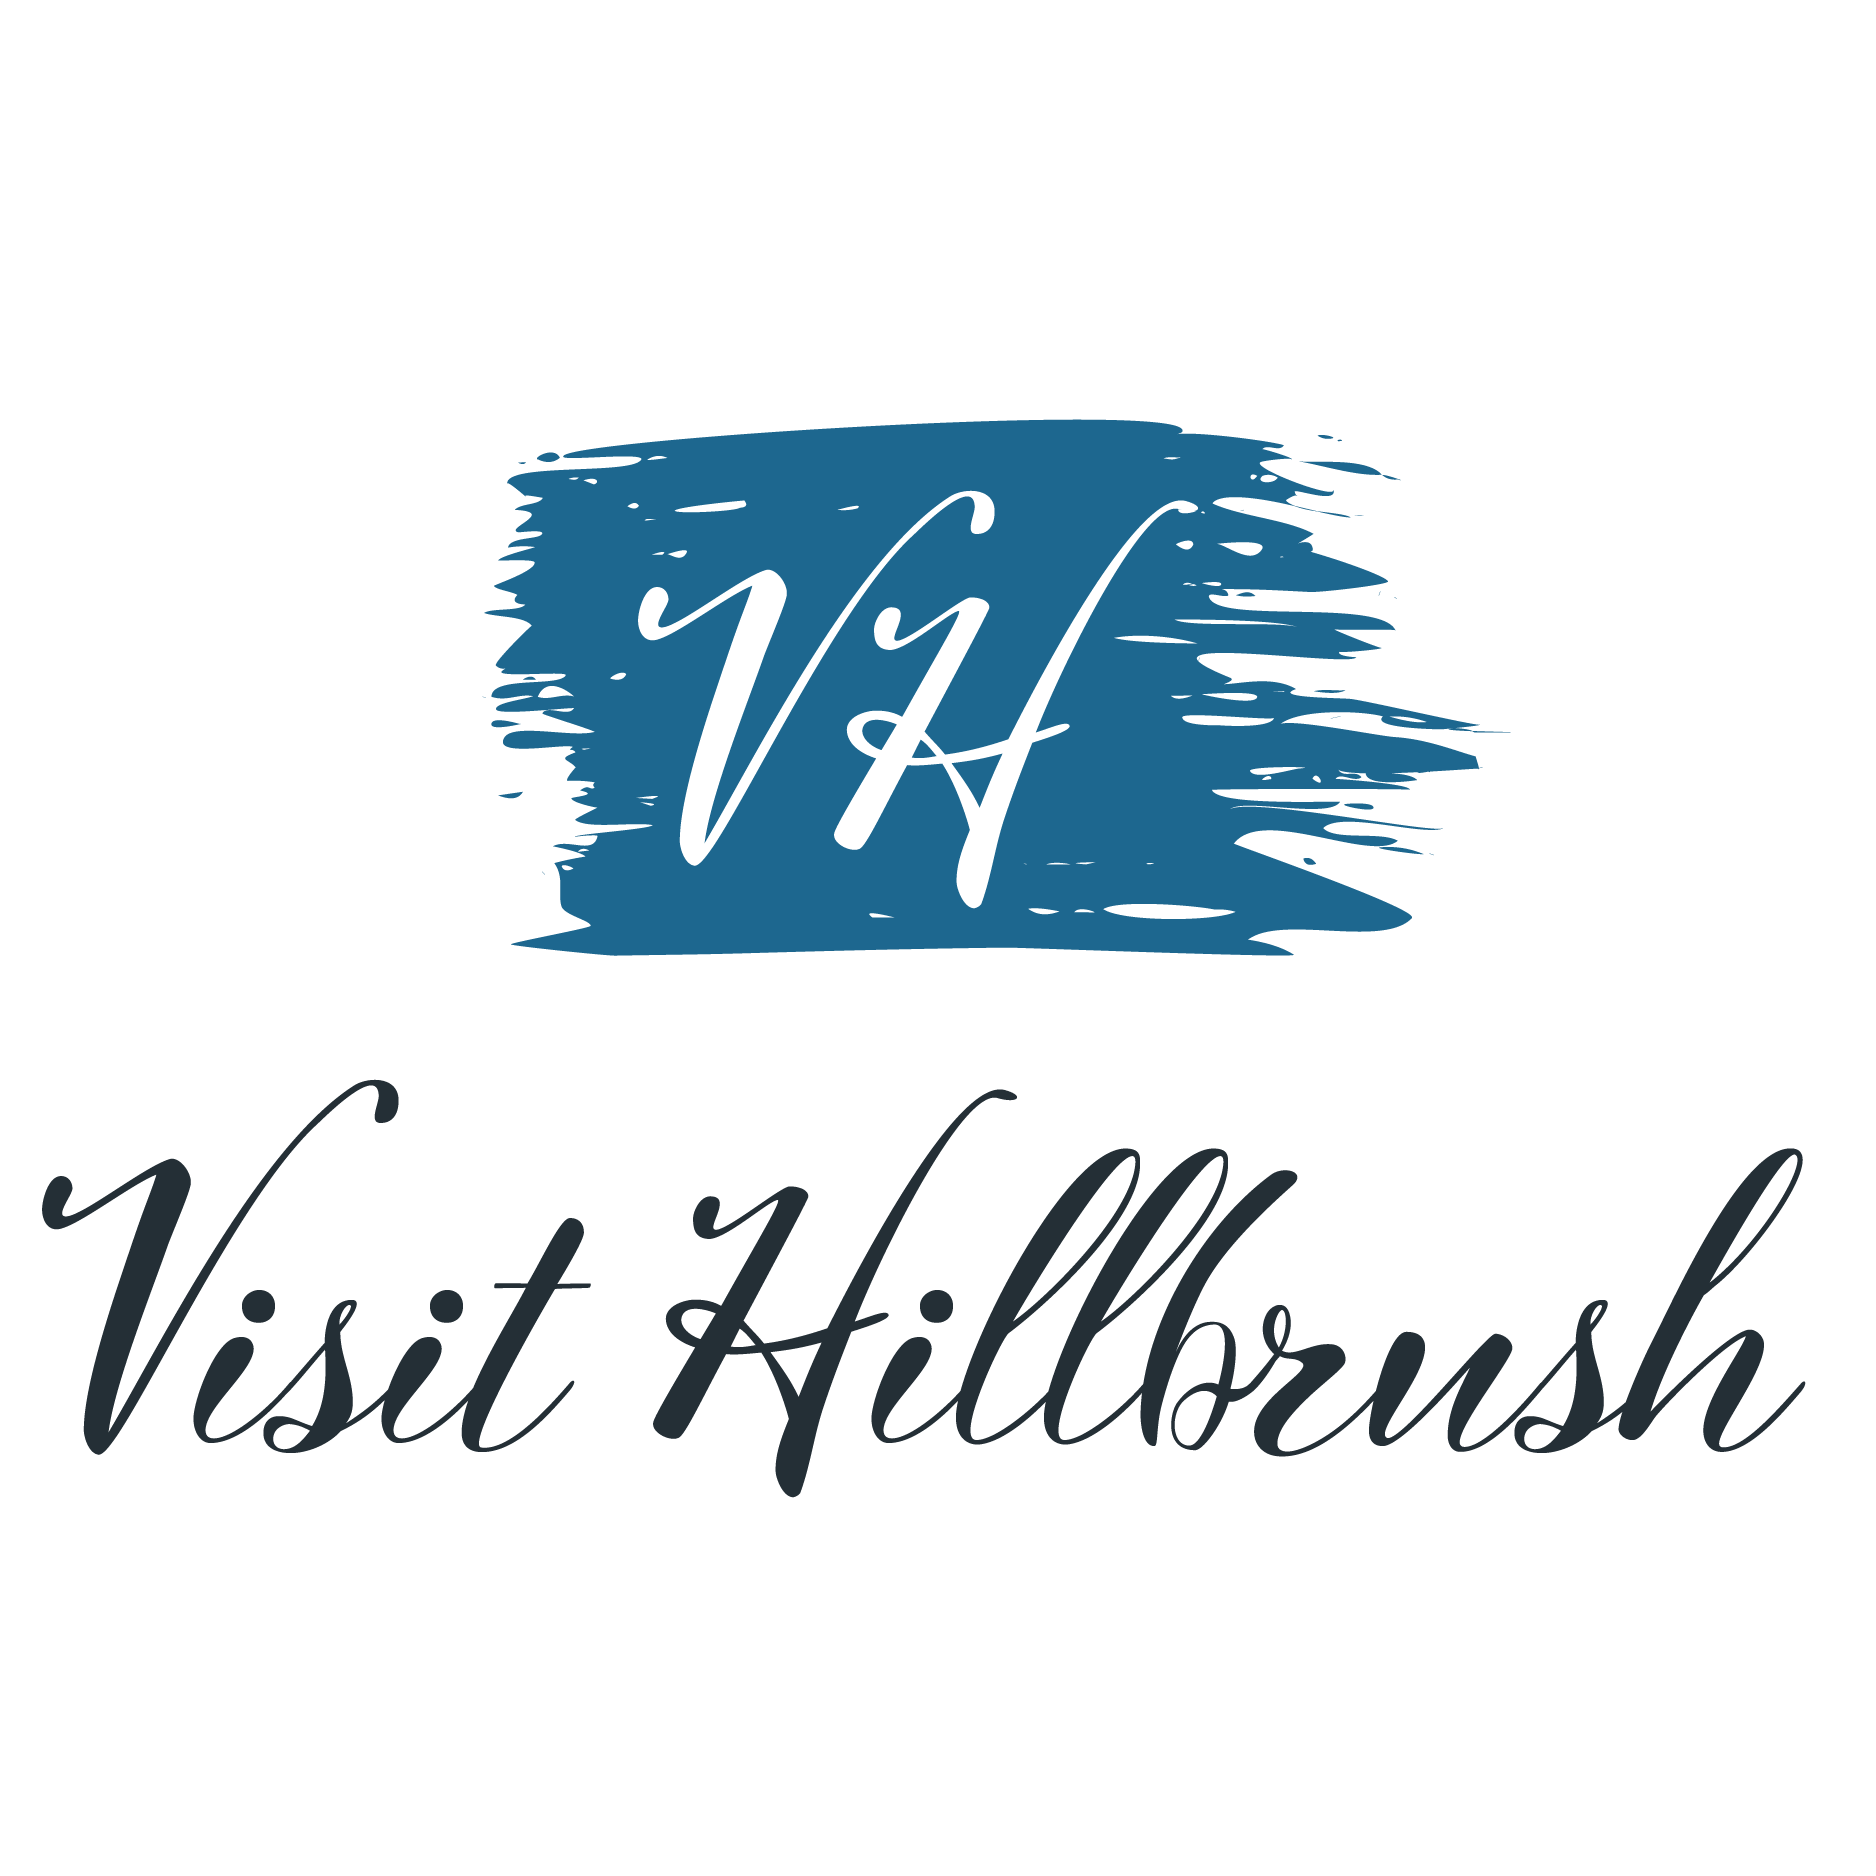 Visit Hillbrush